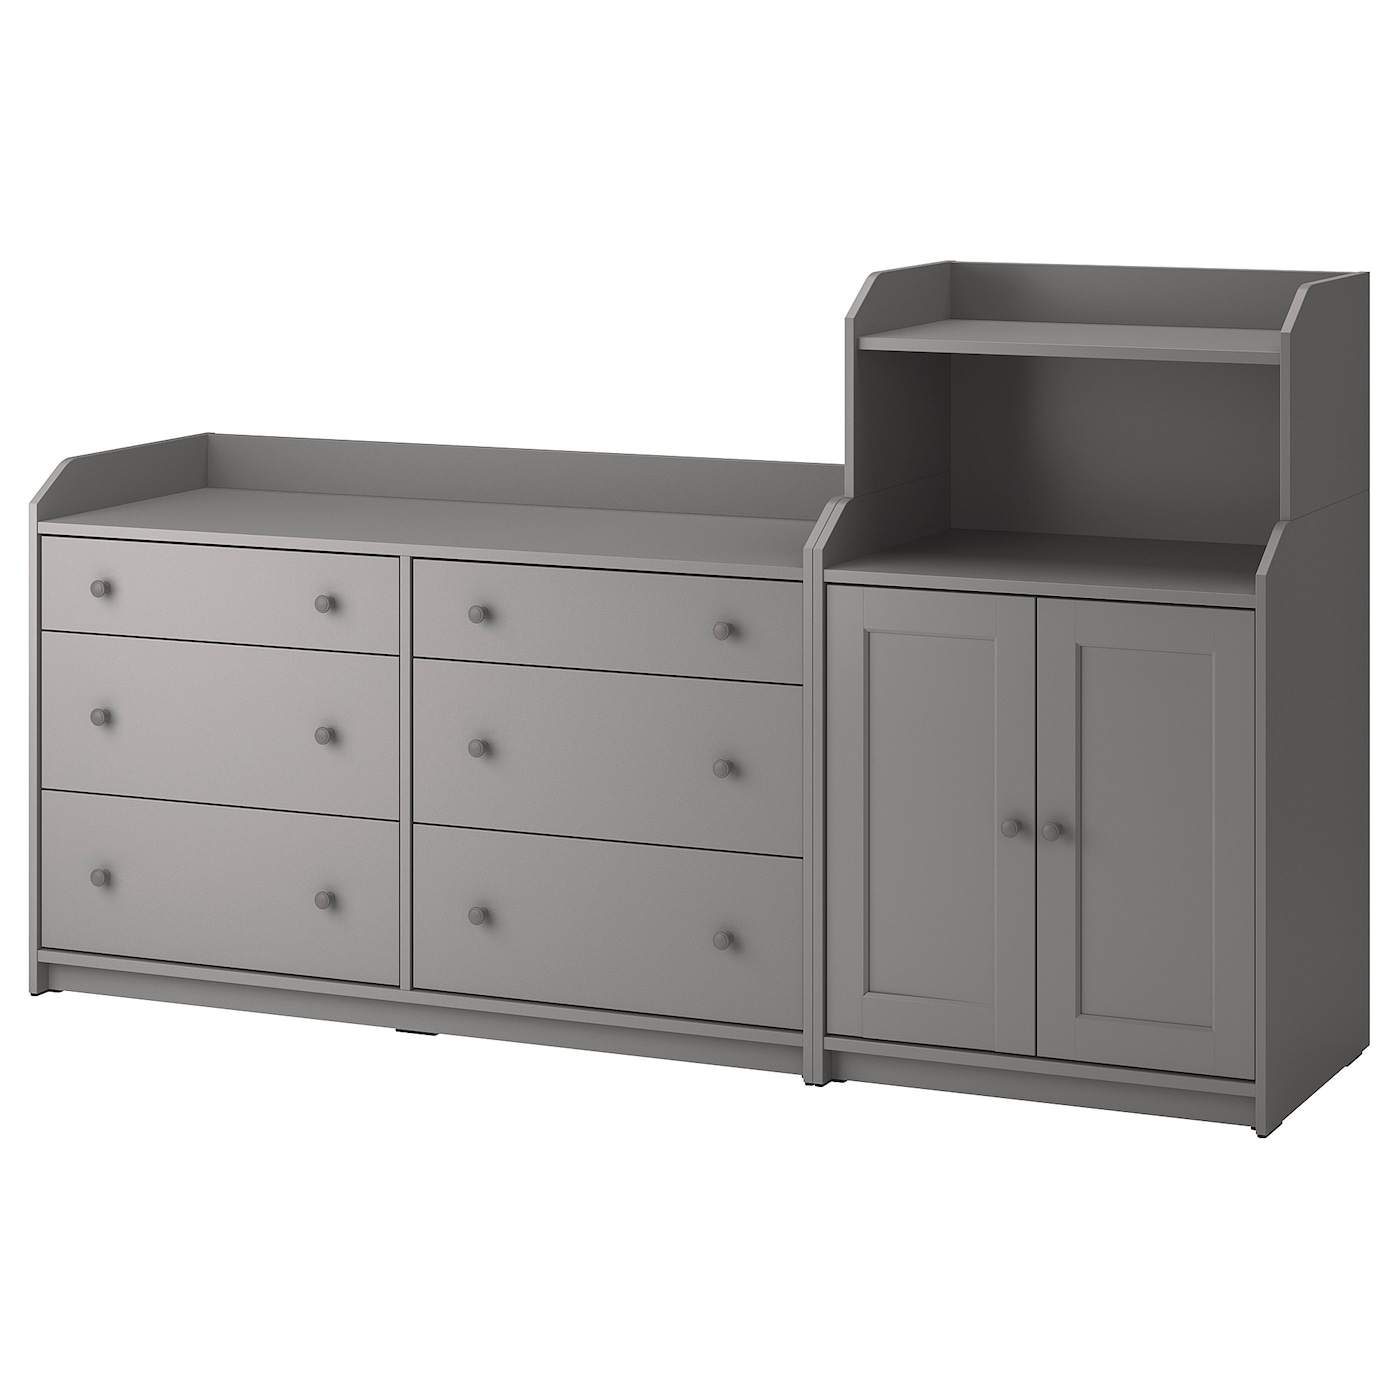 Шкаф - HAUGA IKEA/ ХАУГА ИКЕА,  208x116 см, серый